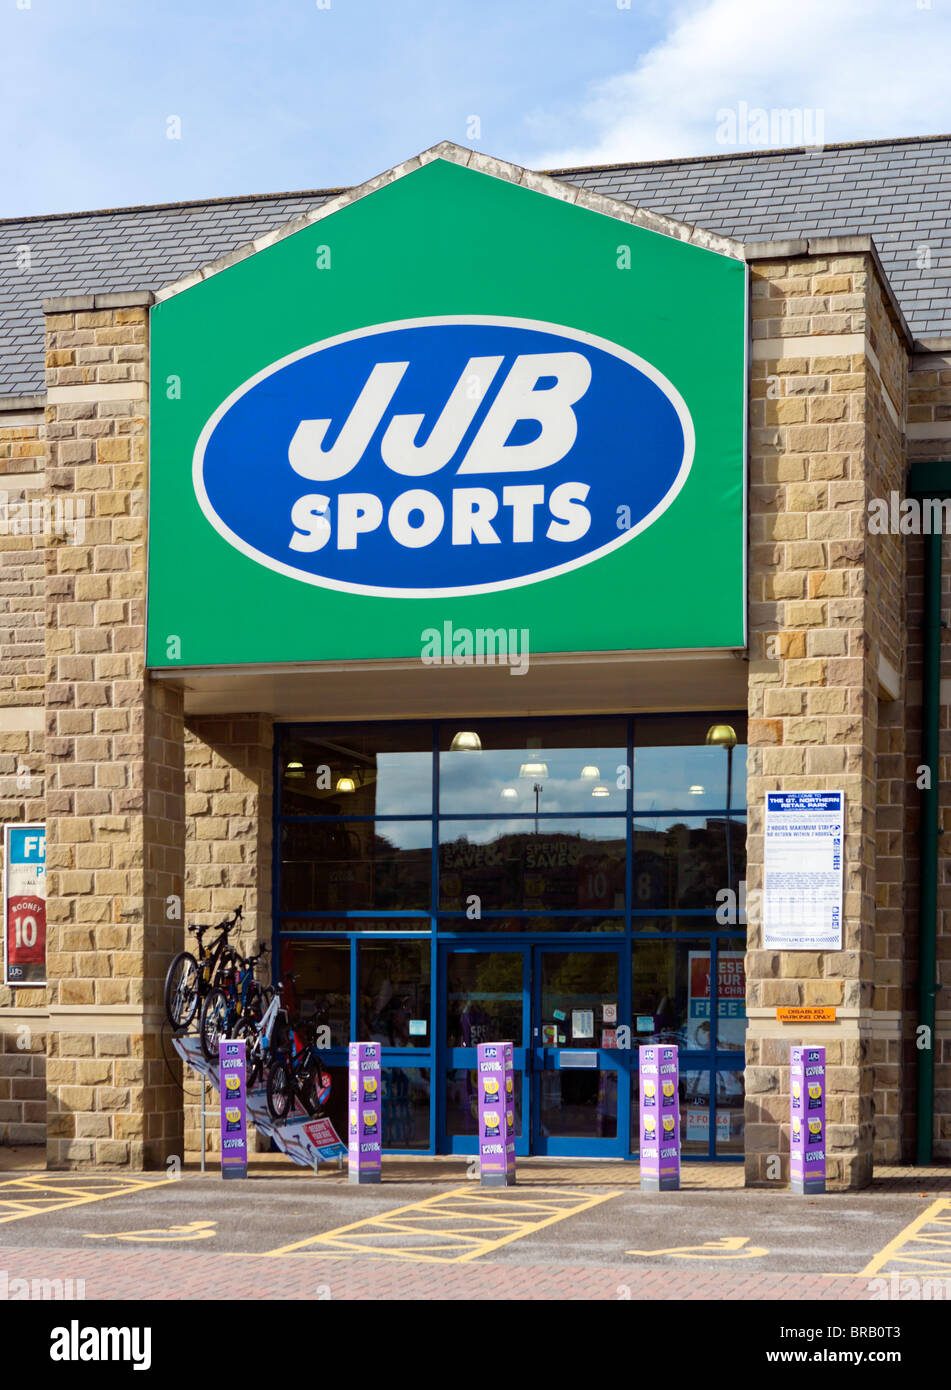 JJB Sports Superstore, Great Northern Retail Park, Leeds Road, Huddersfield, West Yorkshire, England, UK Stock Photo